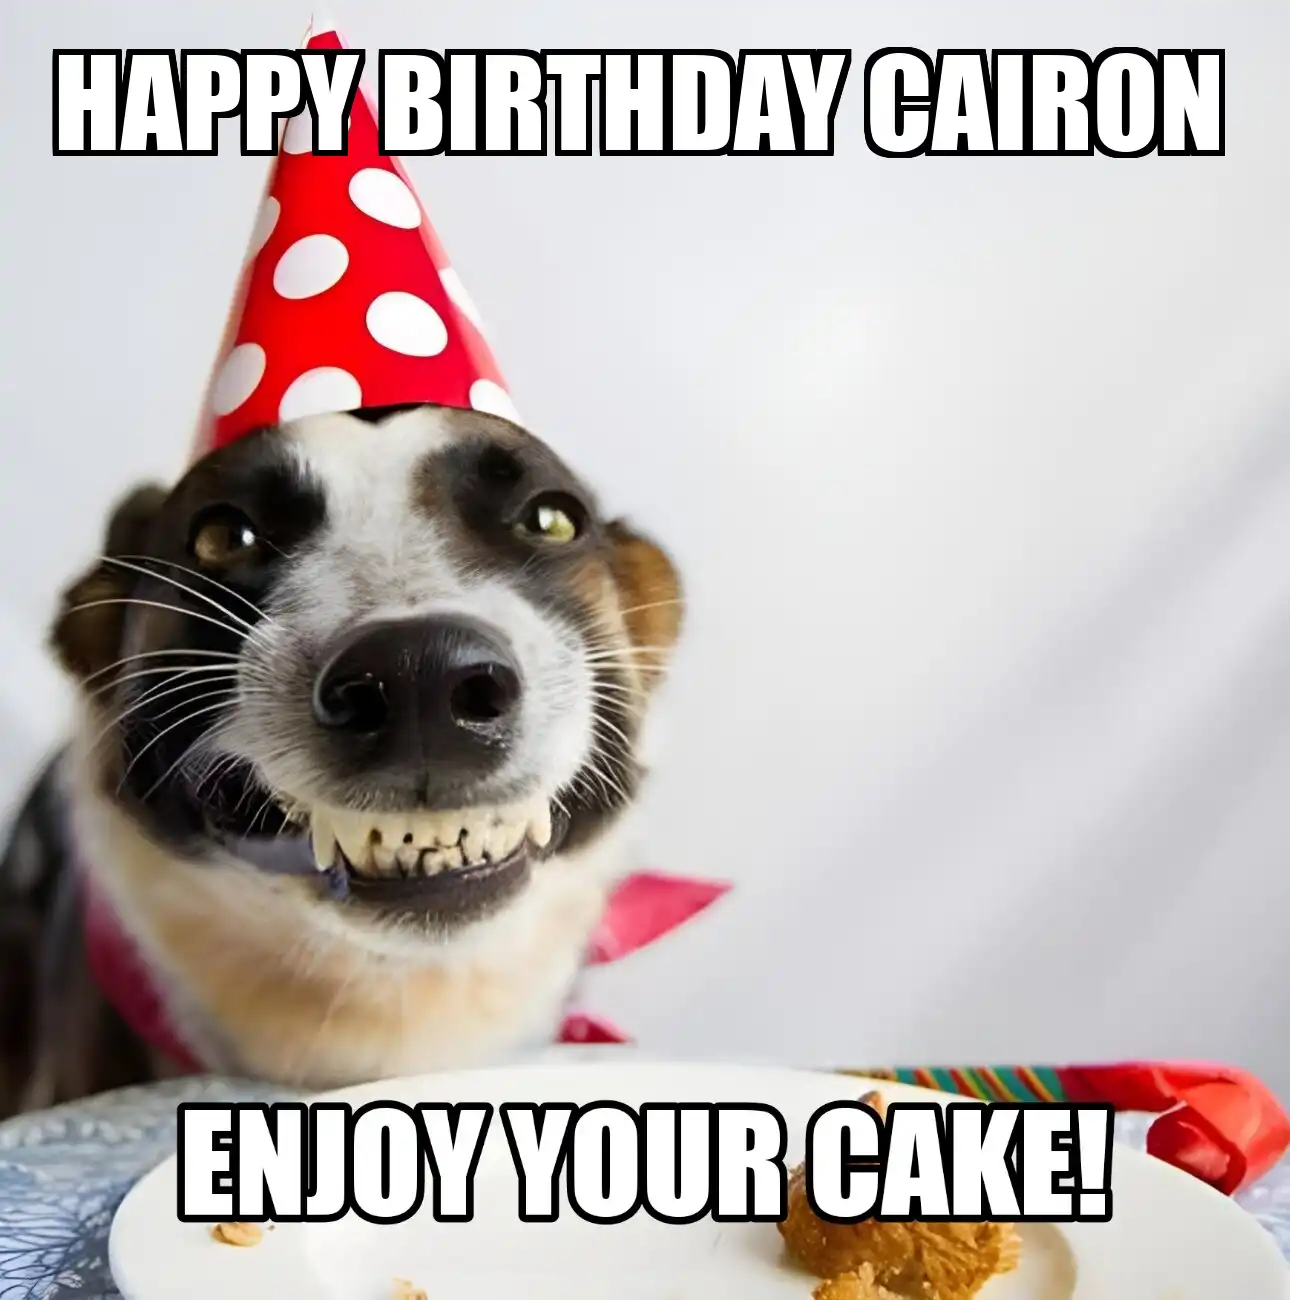 Happy Birthday Cairon Enjoy Your Cake Dog Meme